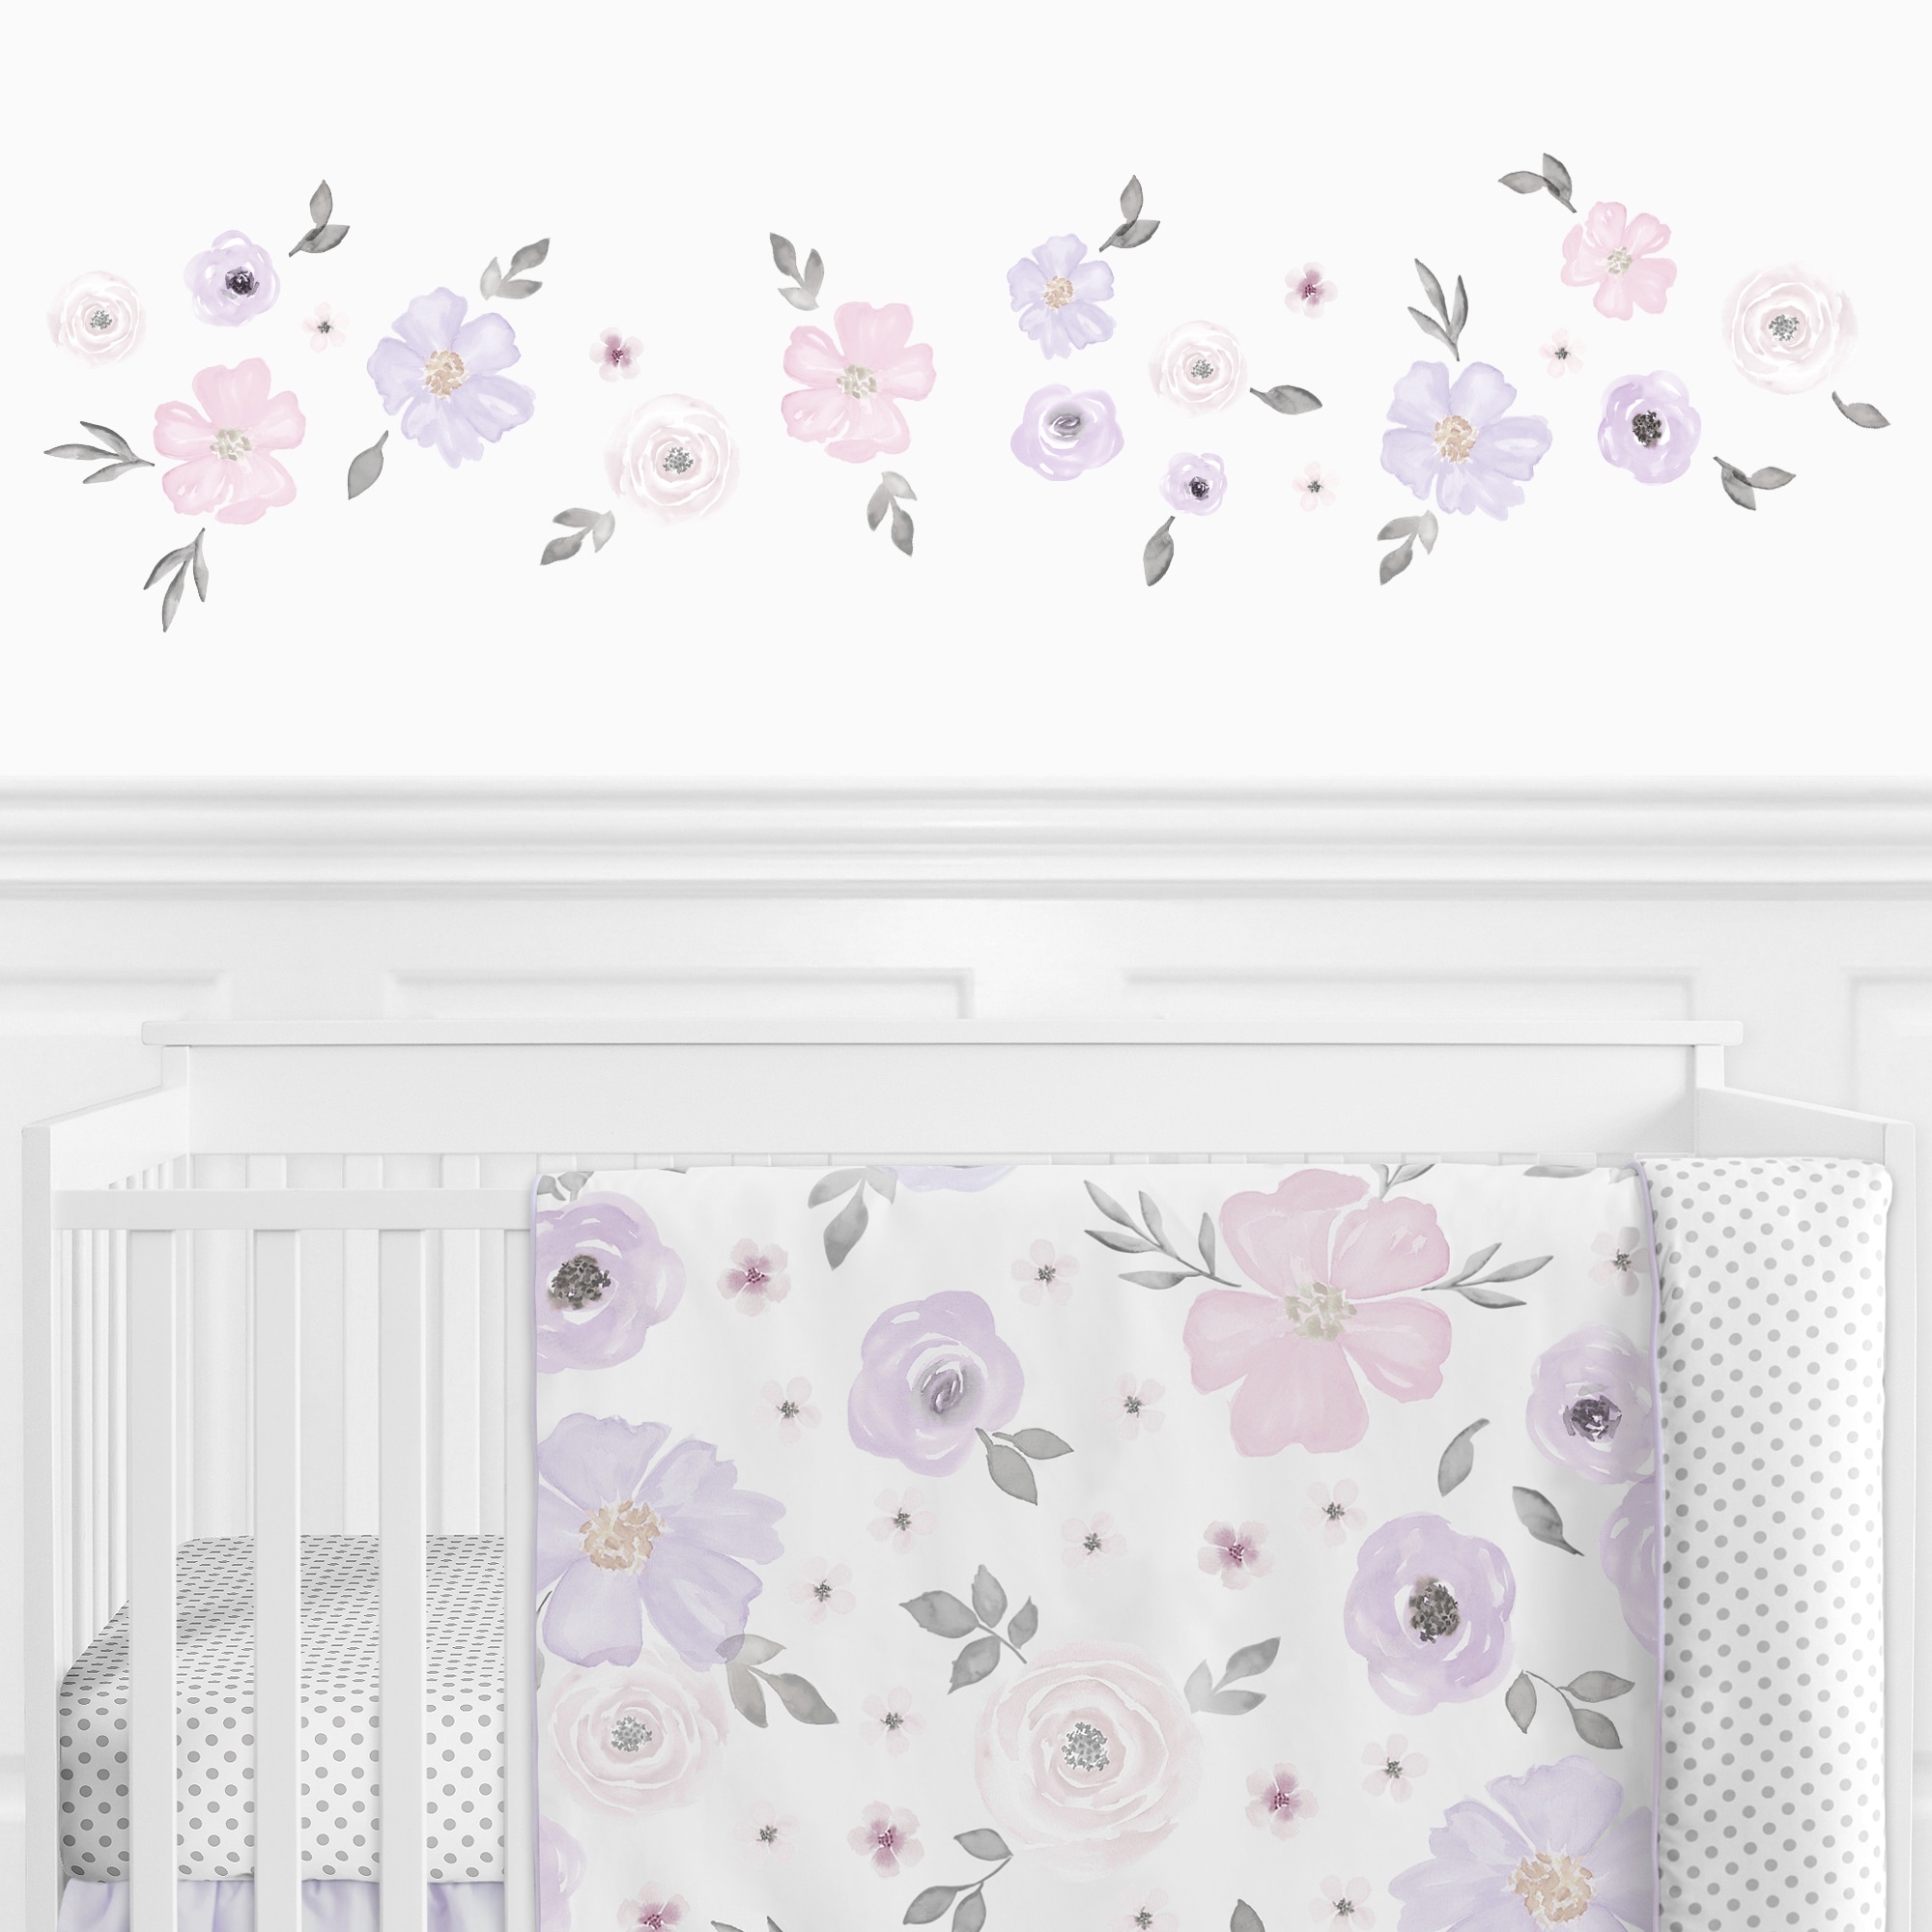 Sweet Jojo Designs Lavender Purple Pink Grey Watercolor Floral Wall Decal Stickers Art Nursery Decor (Set of 4) - Rose Flower